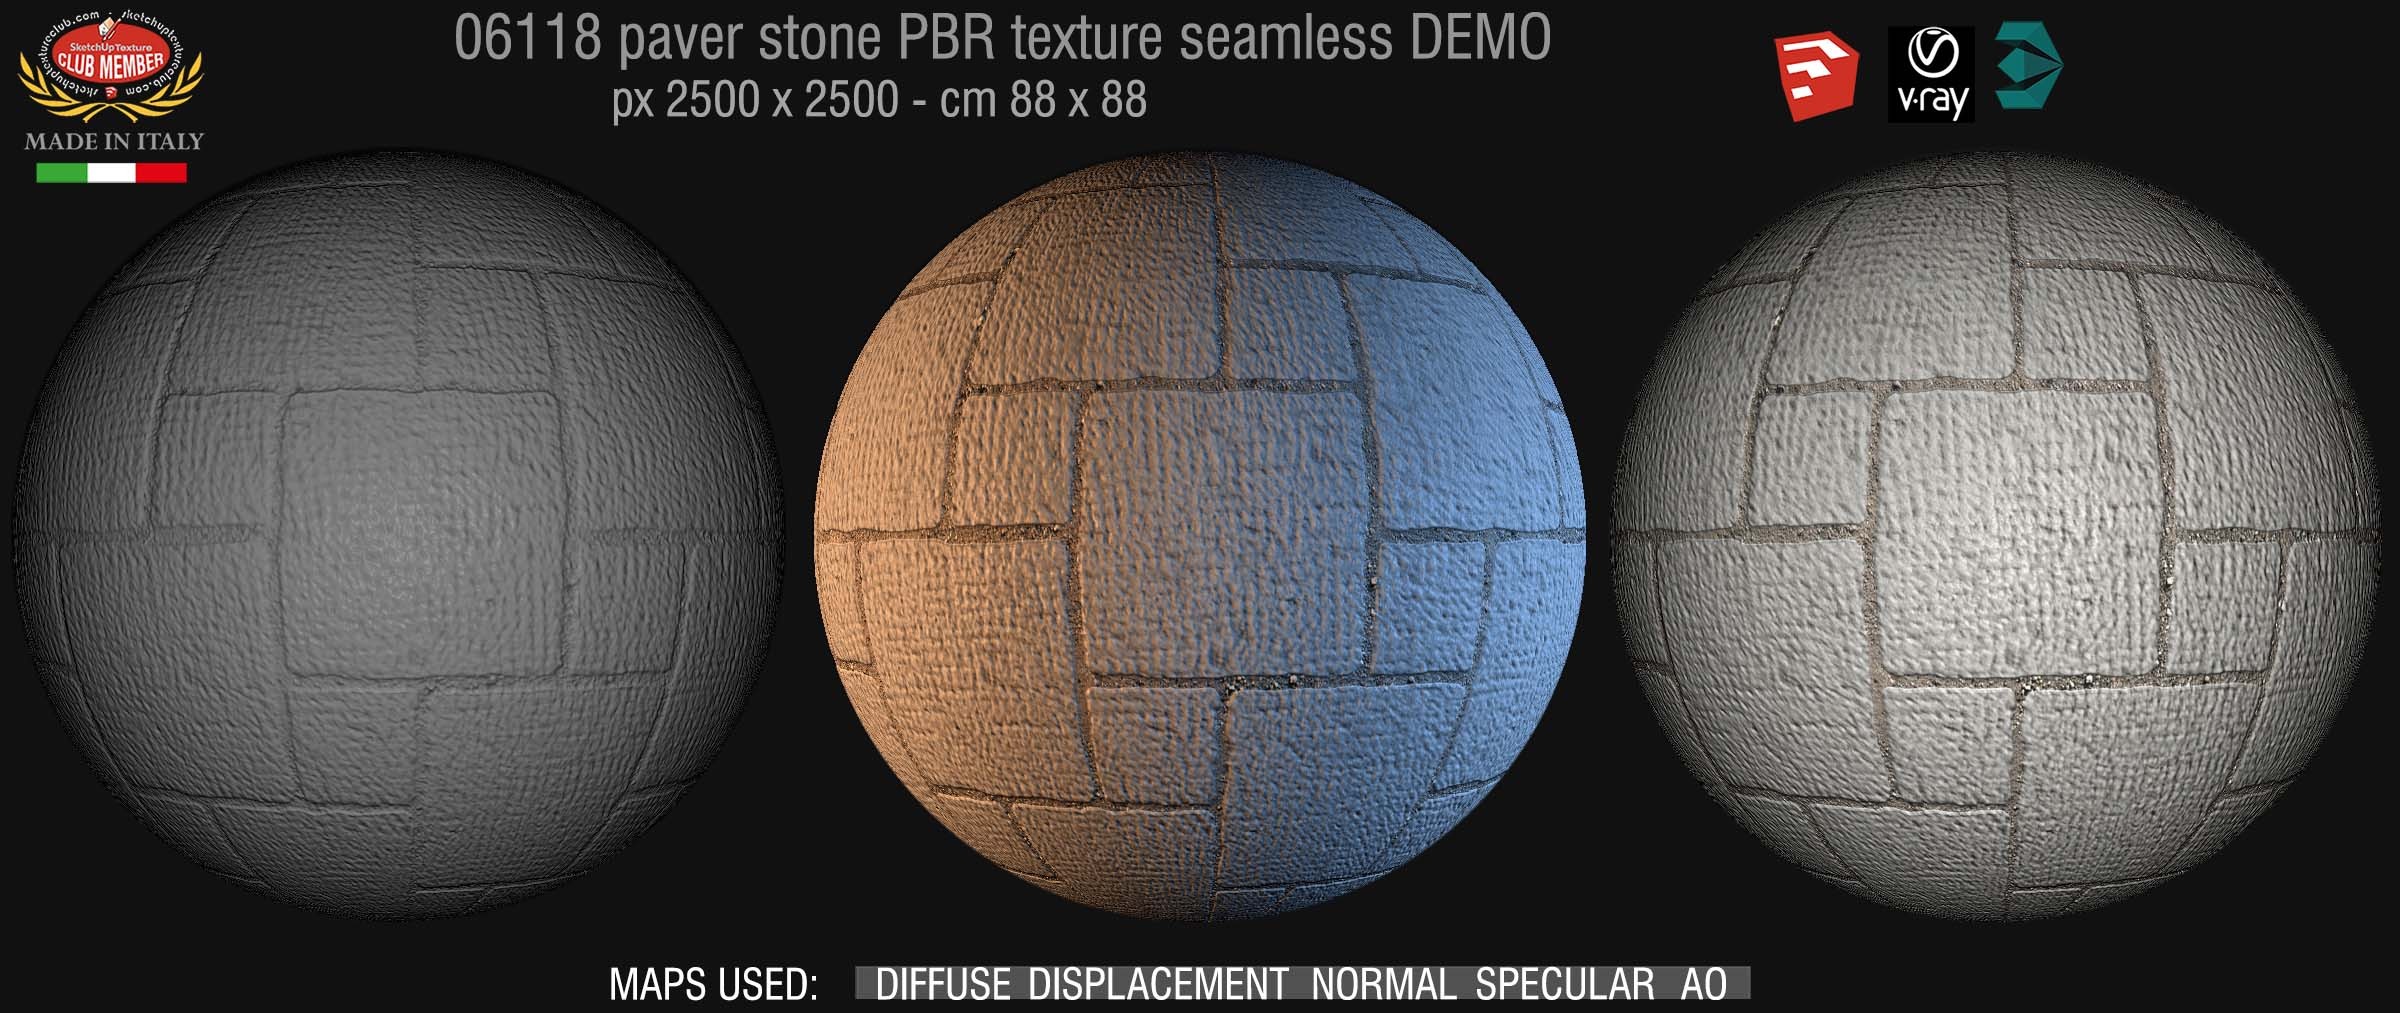 06118 paver stone PBR texture seamless DEMO